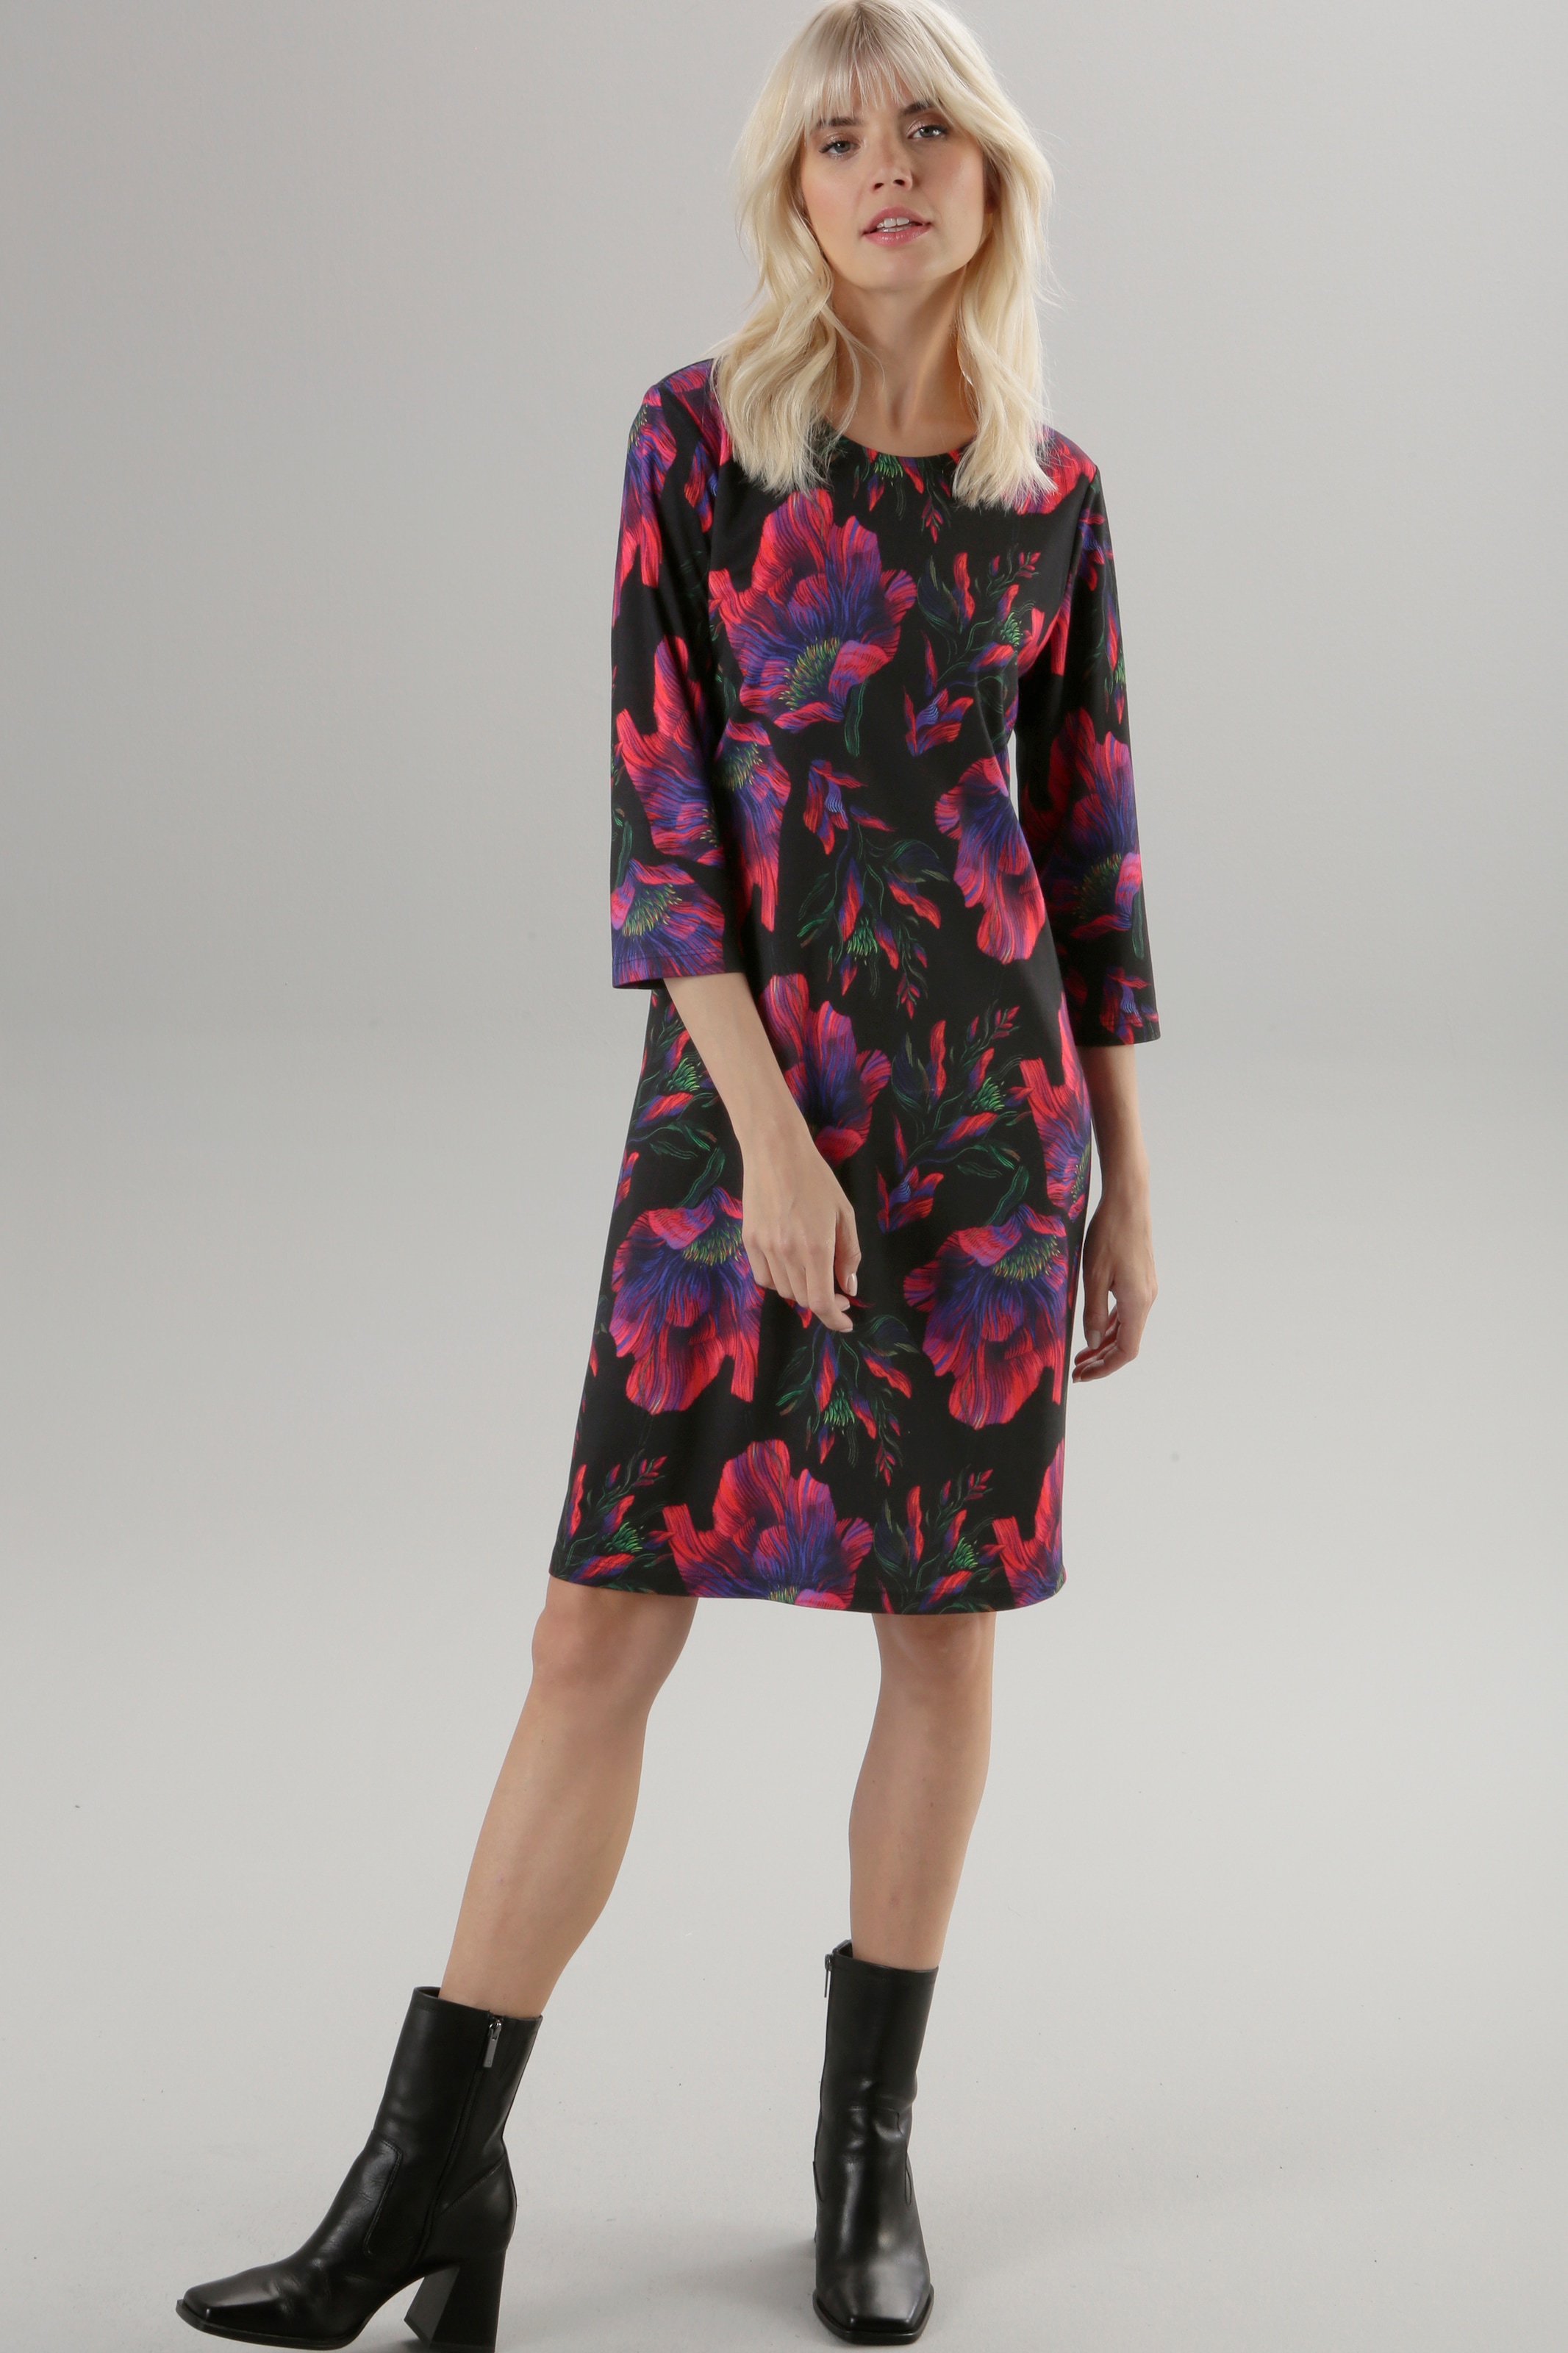 Aniston SELECTED mit in kaufen Knallfarben Blumendruck Jerseykleid